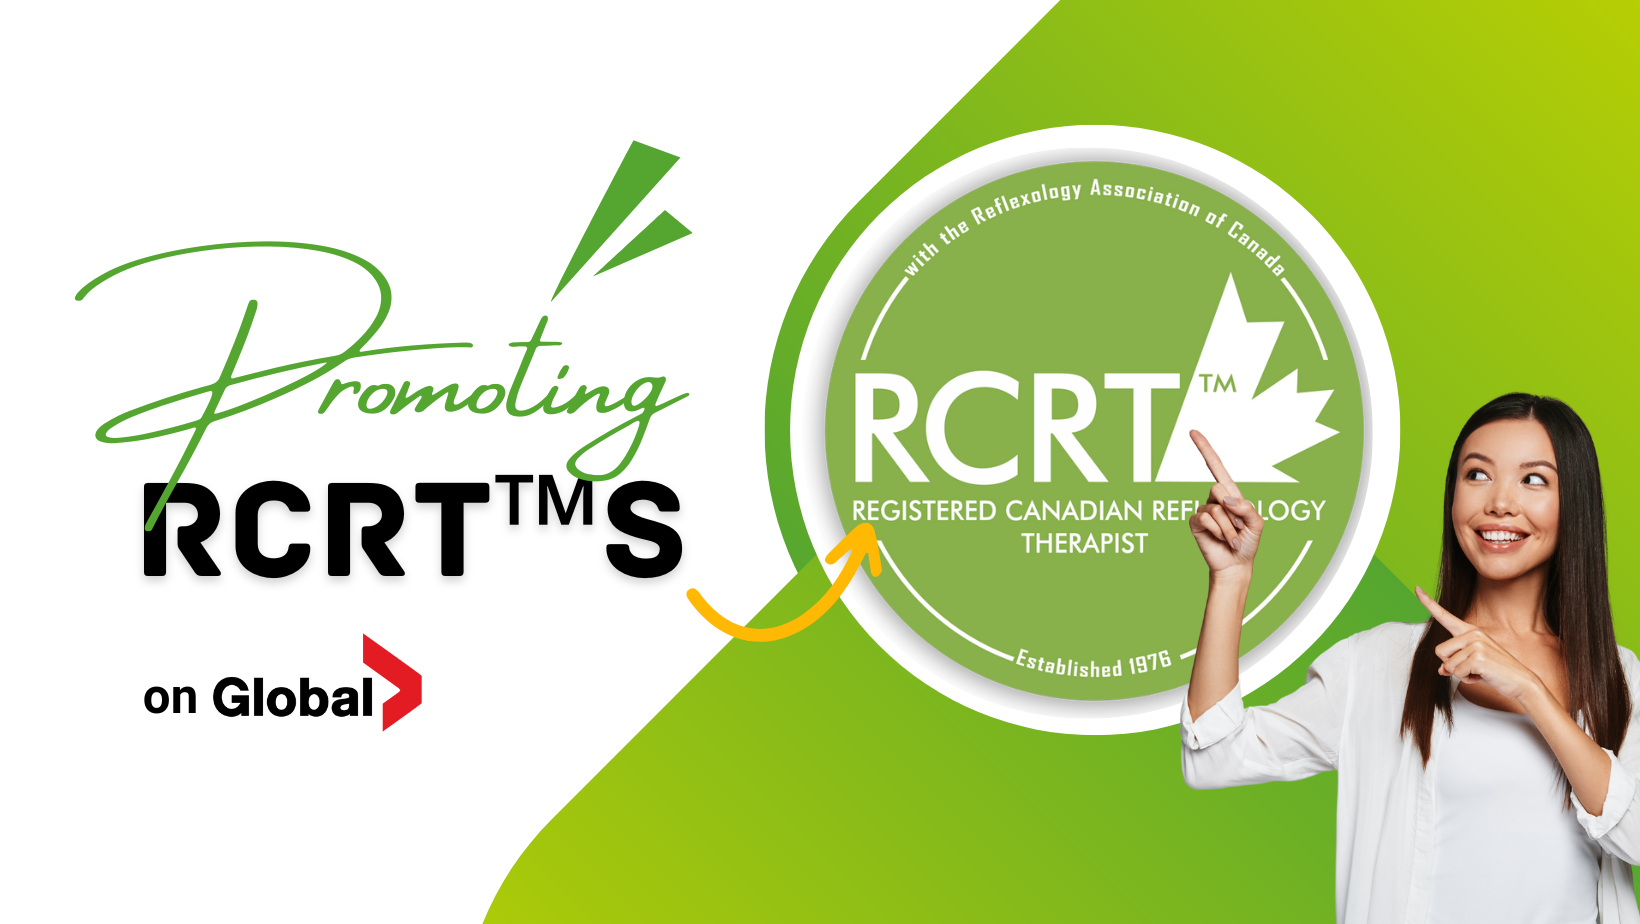 Promoting RCRTs